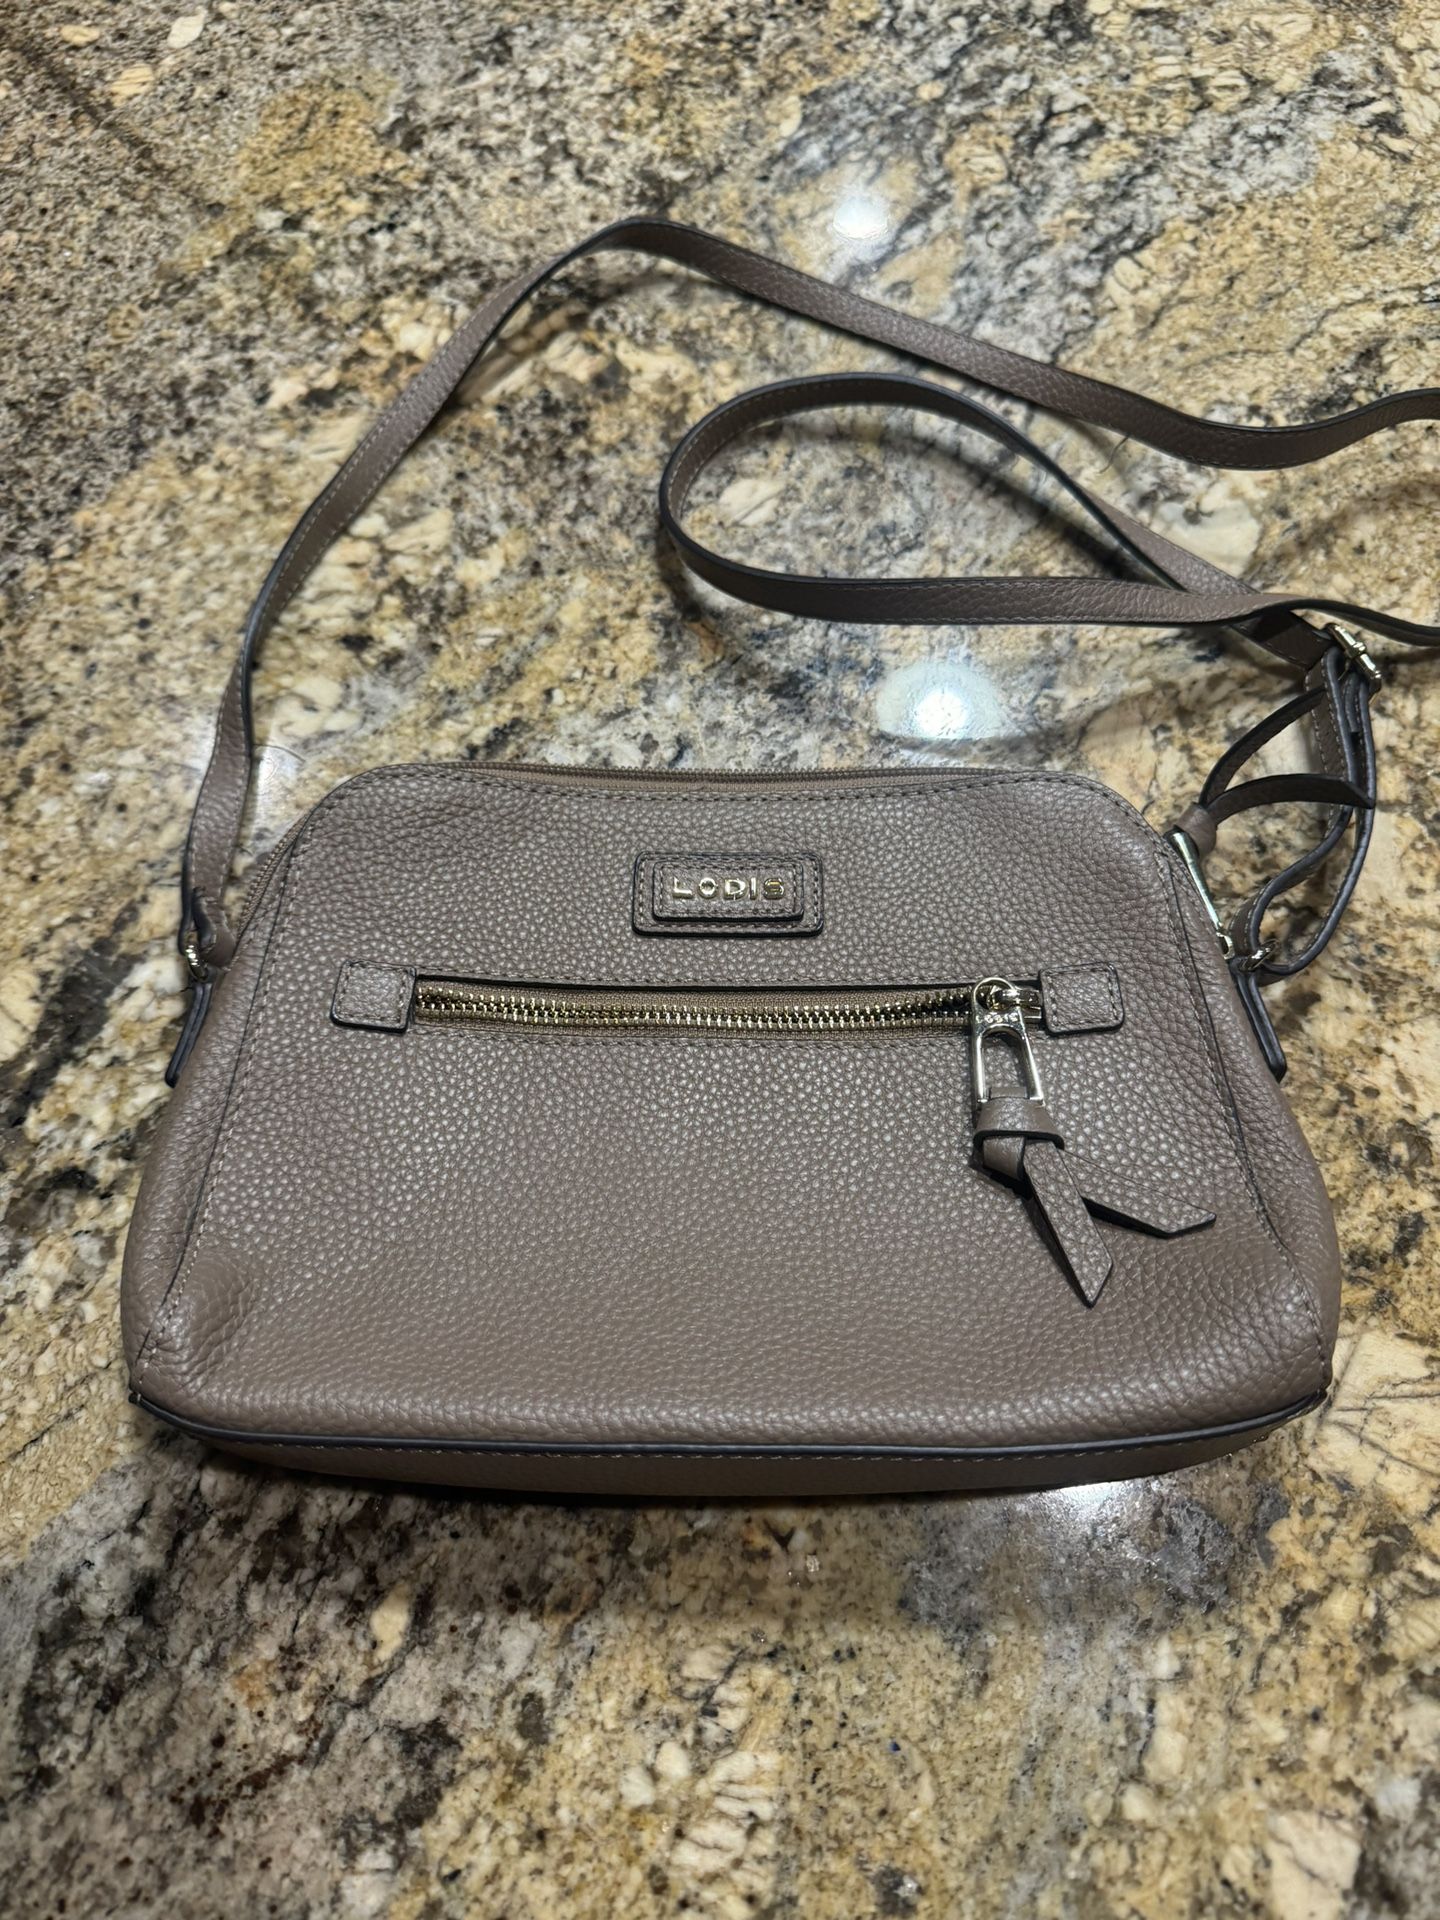 LODIS Charlotte Pebble Tan Leather Medium/Small Crossbody Bag